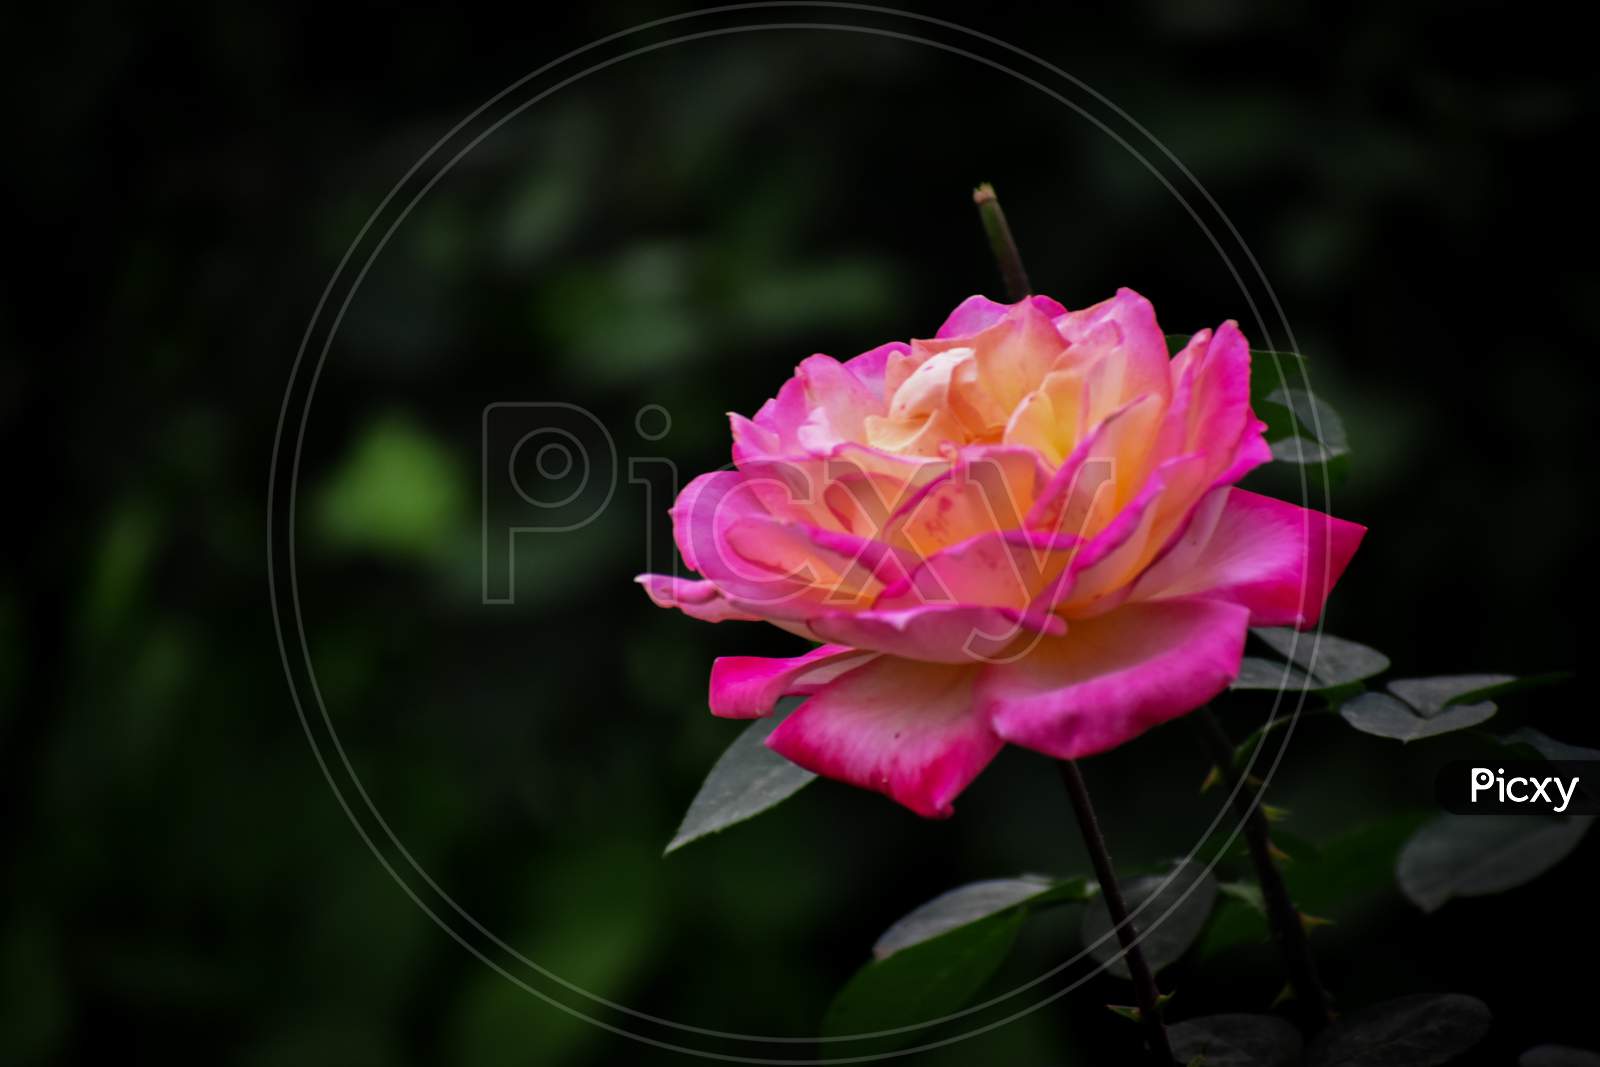 Garden Spray Pink Rose Close Up View